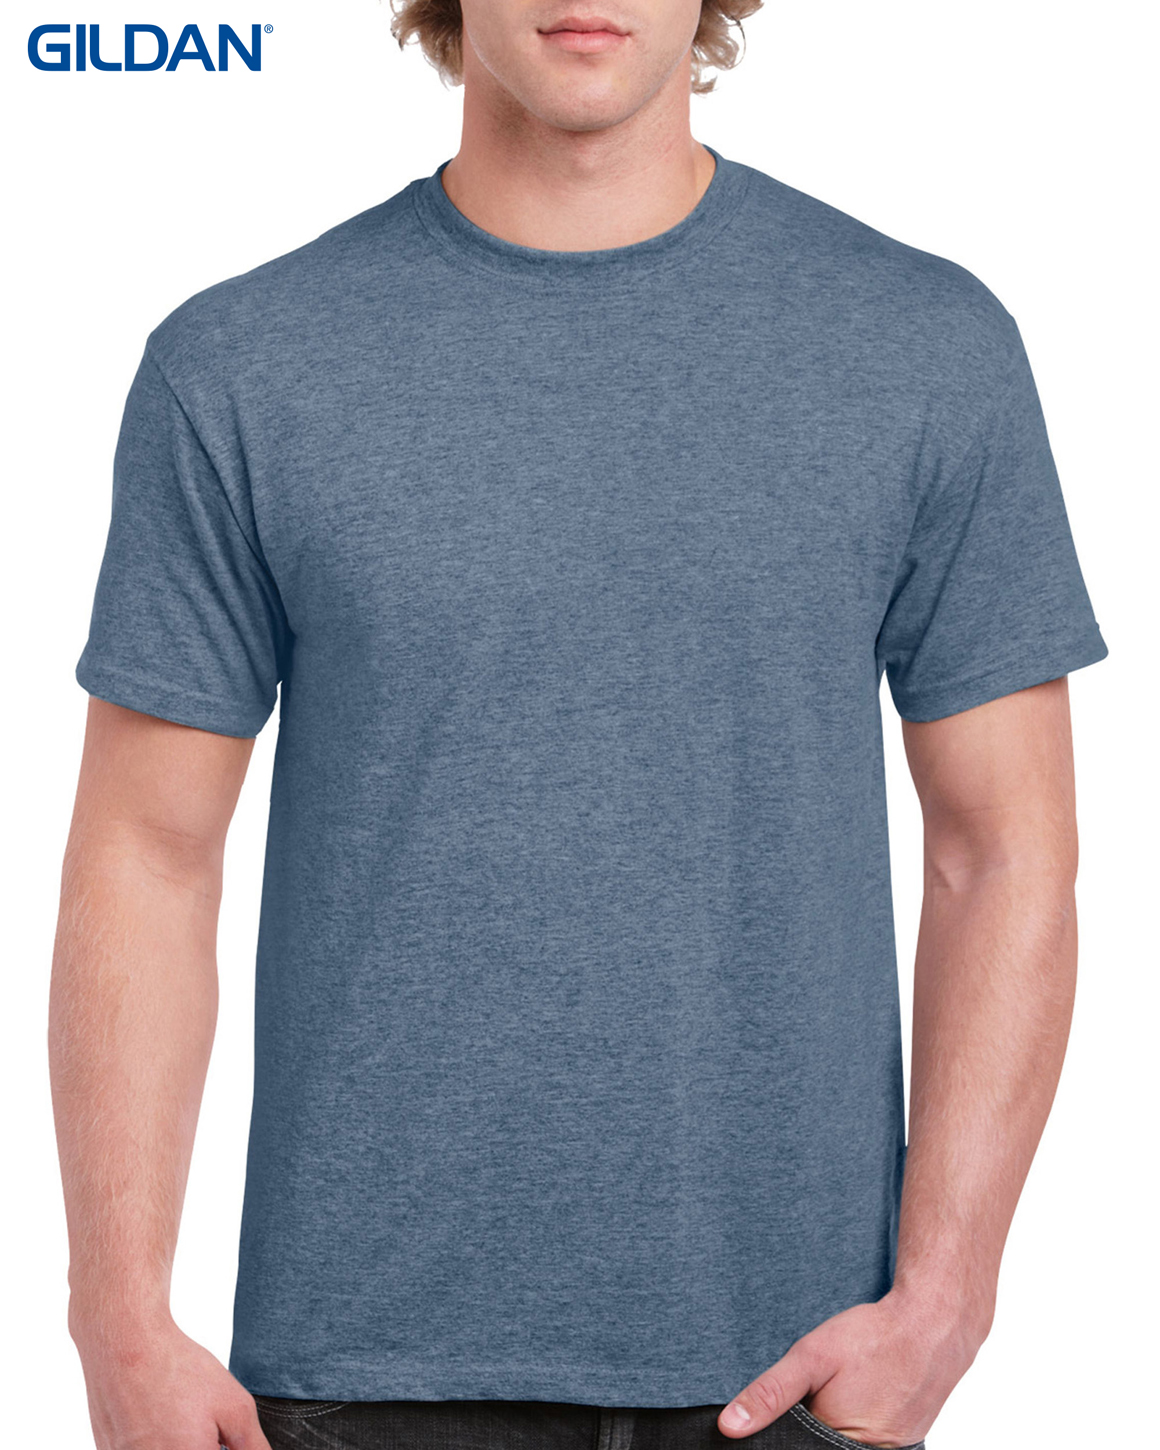 Download T Shirts : GILDAN MENS 200GM 100% COTTON CN T-SHIRT G2000